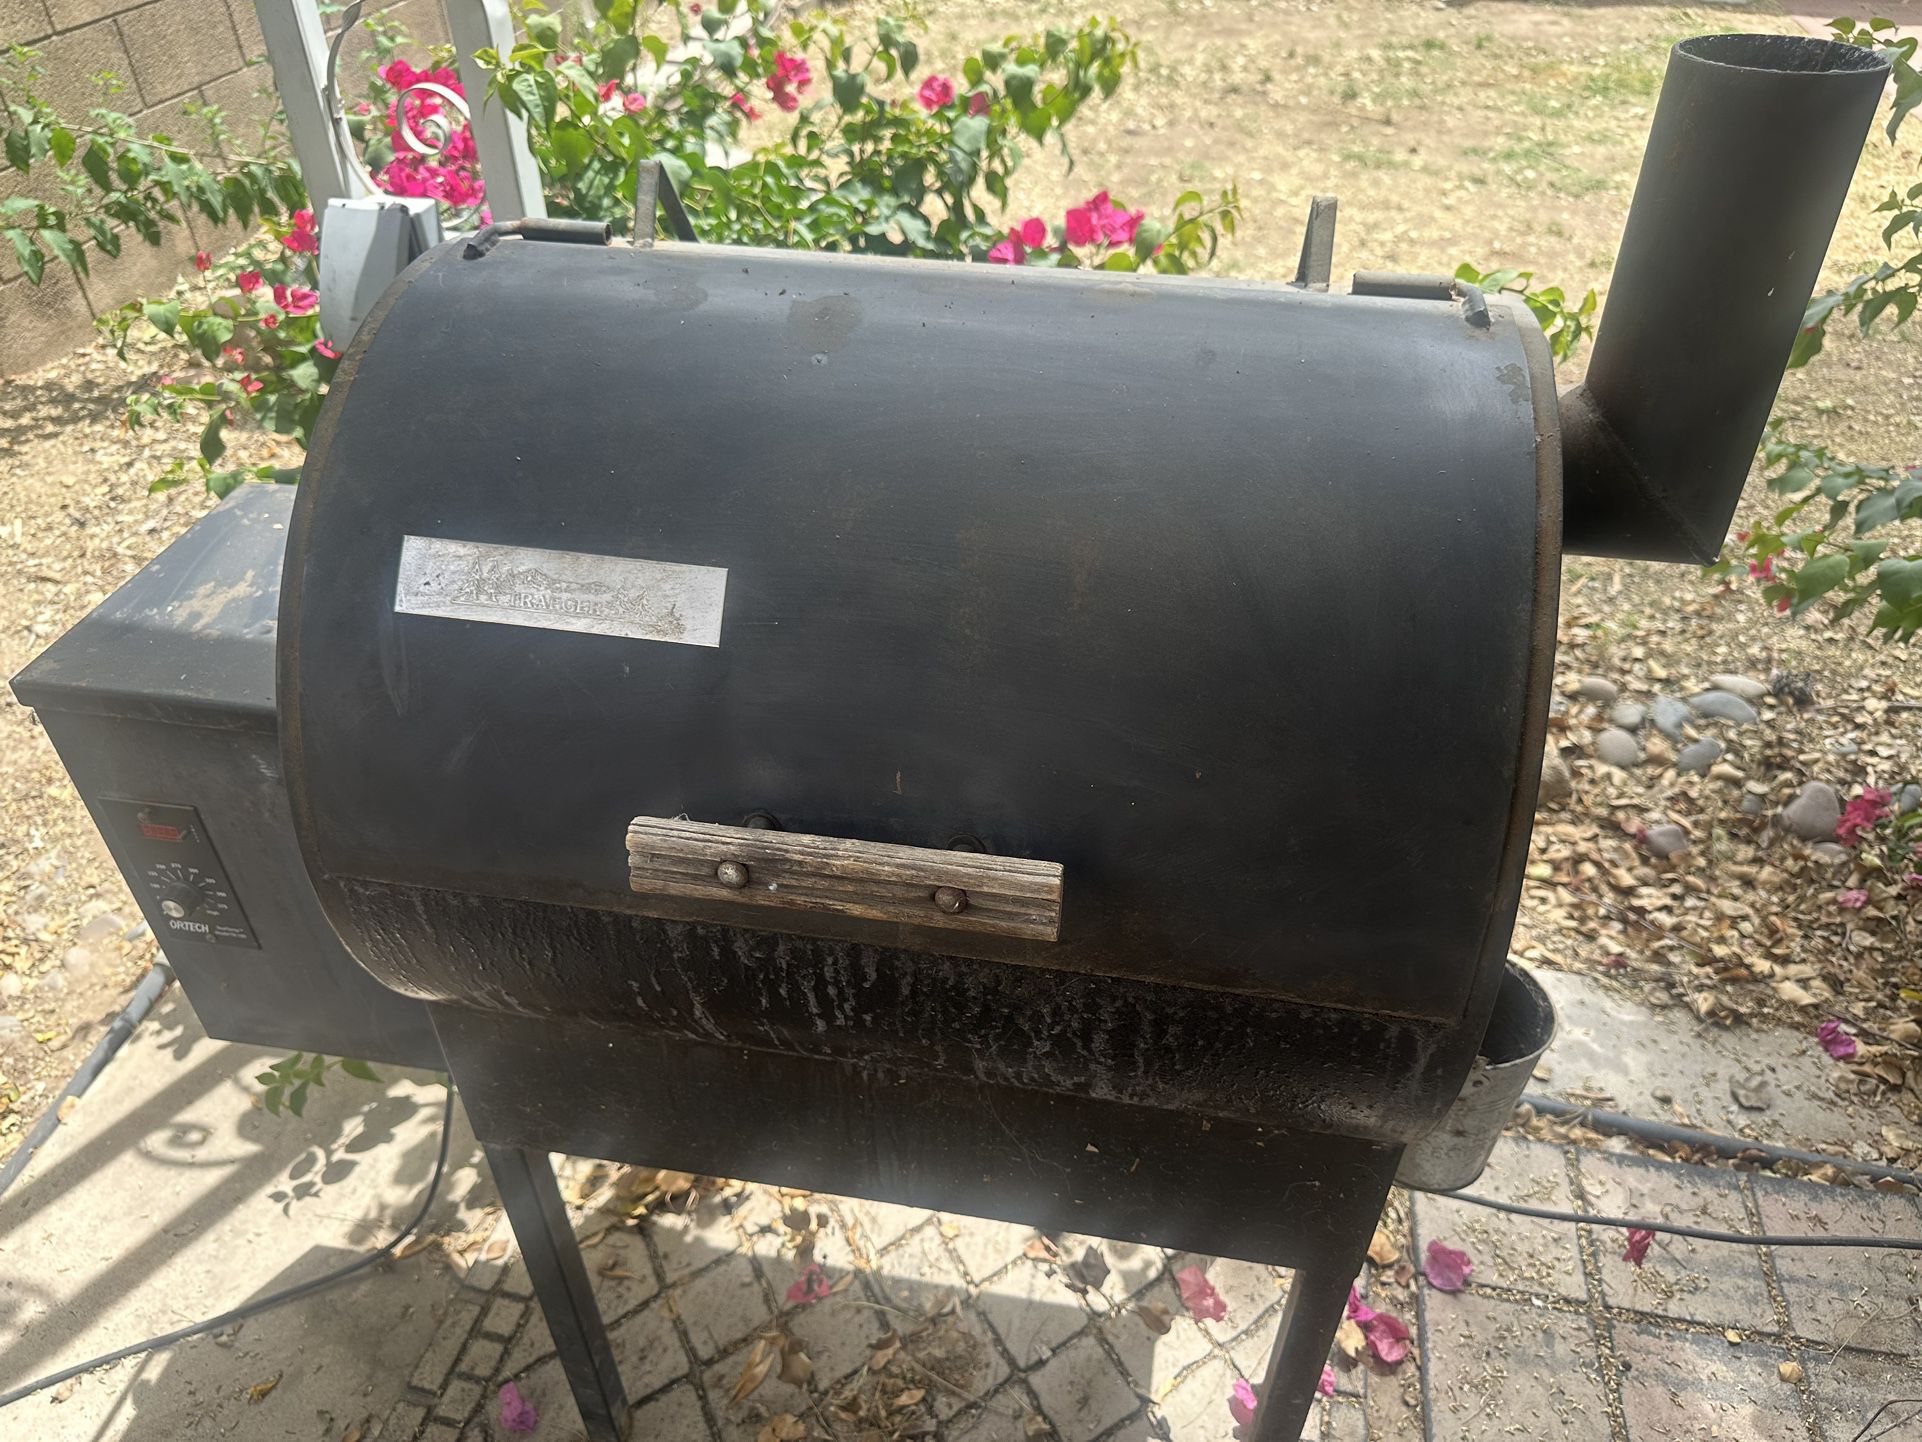  Traeger grill Smoker BBQ 